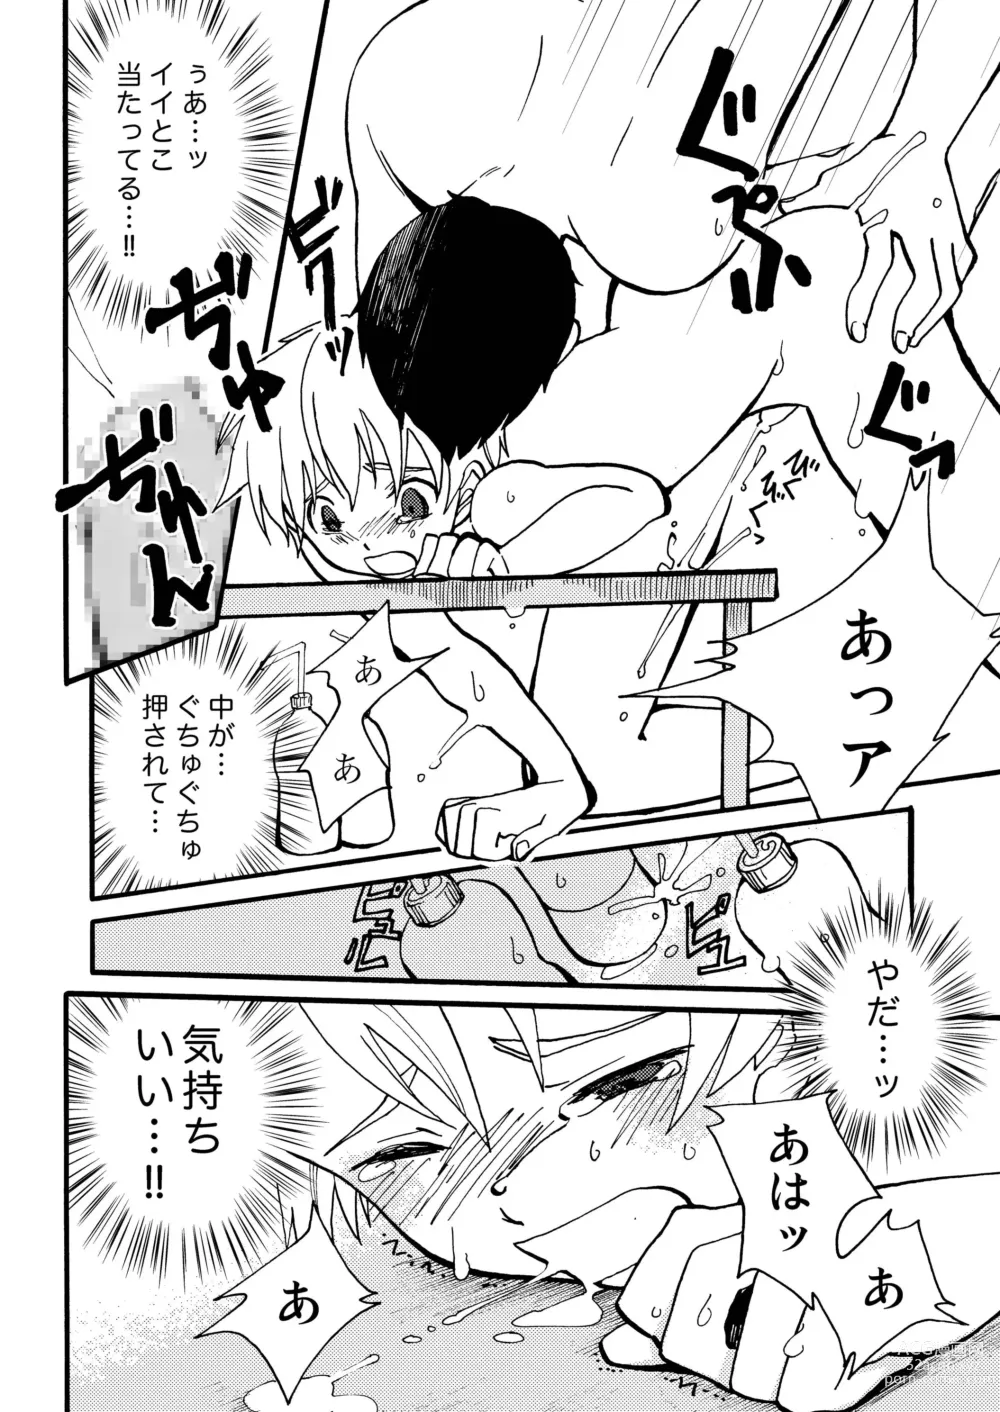 Page 18 of doujinshi Suki!